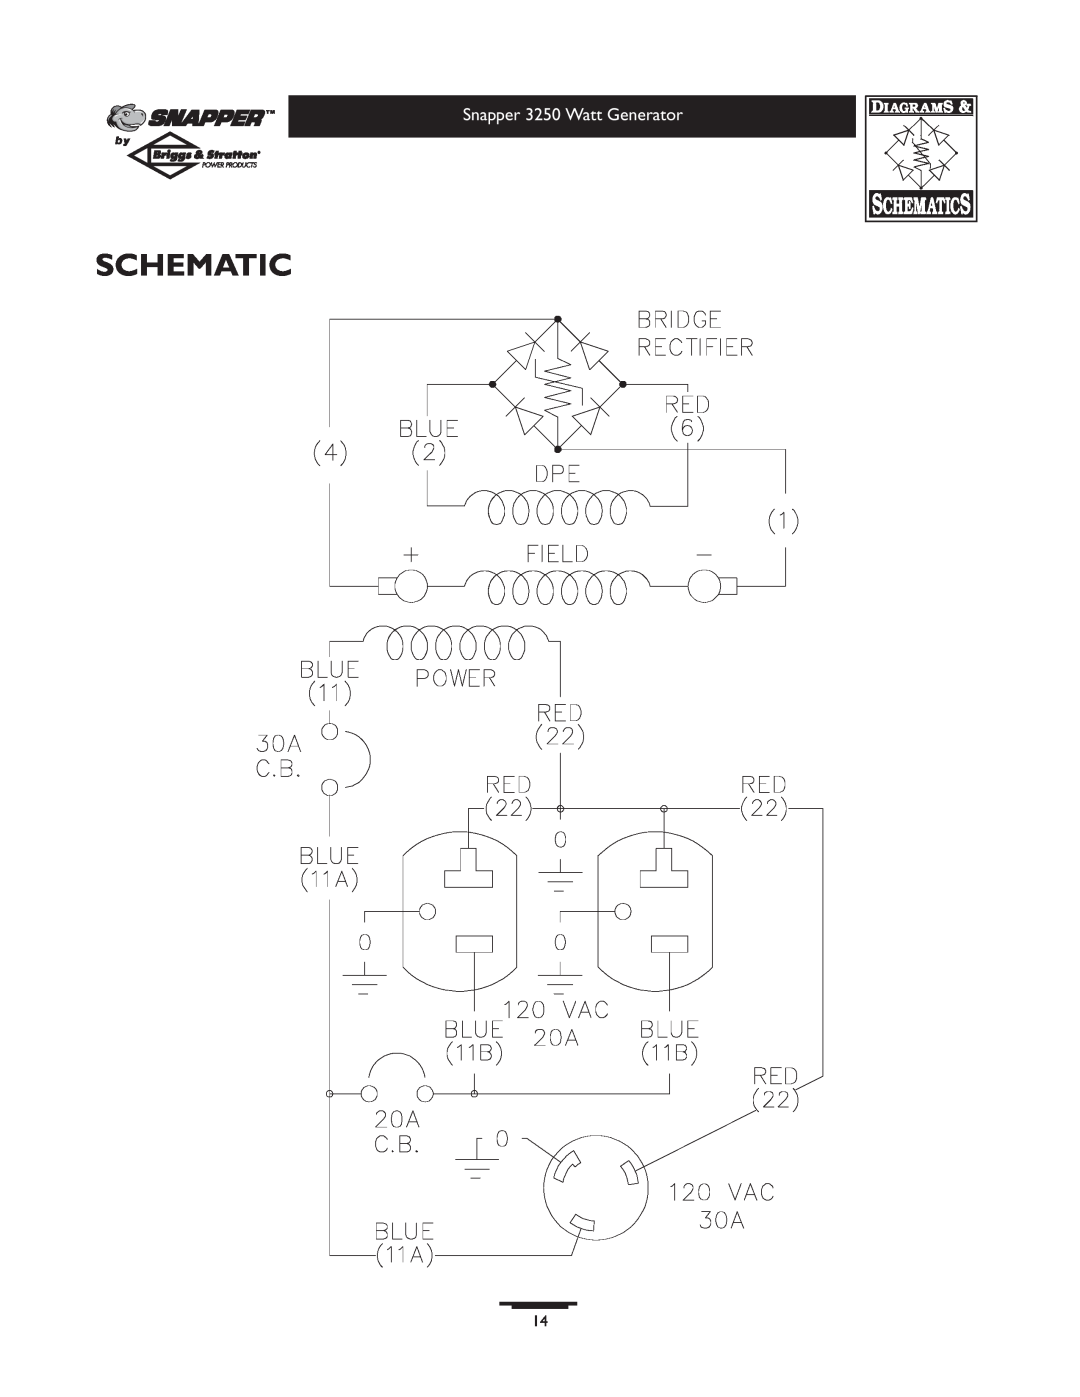 Snapper owner manual Schematic, Snapper 3250 Watt Generator 